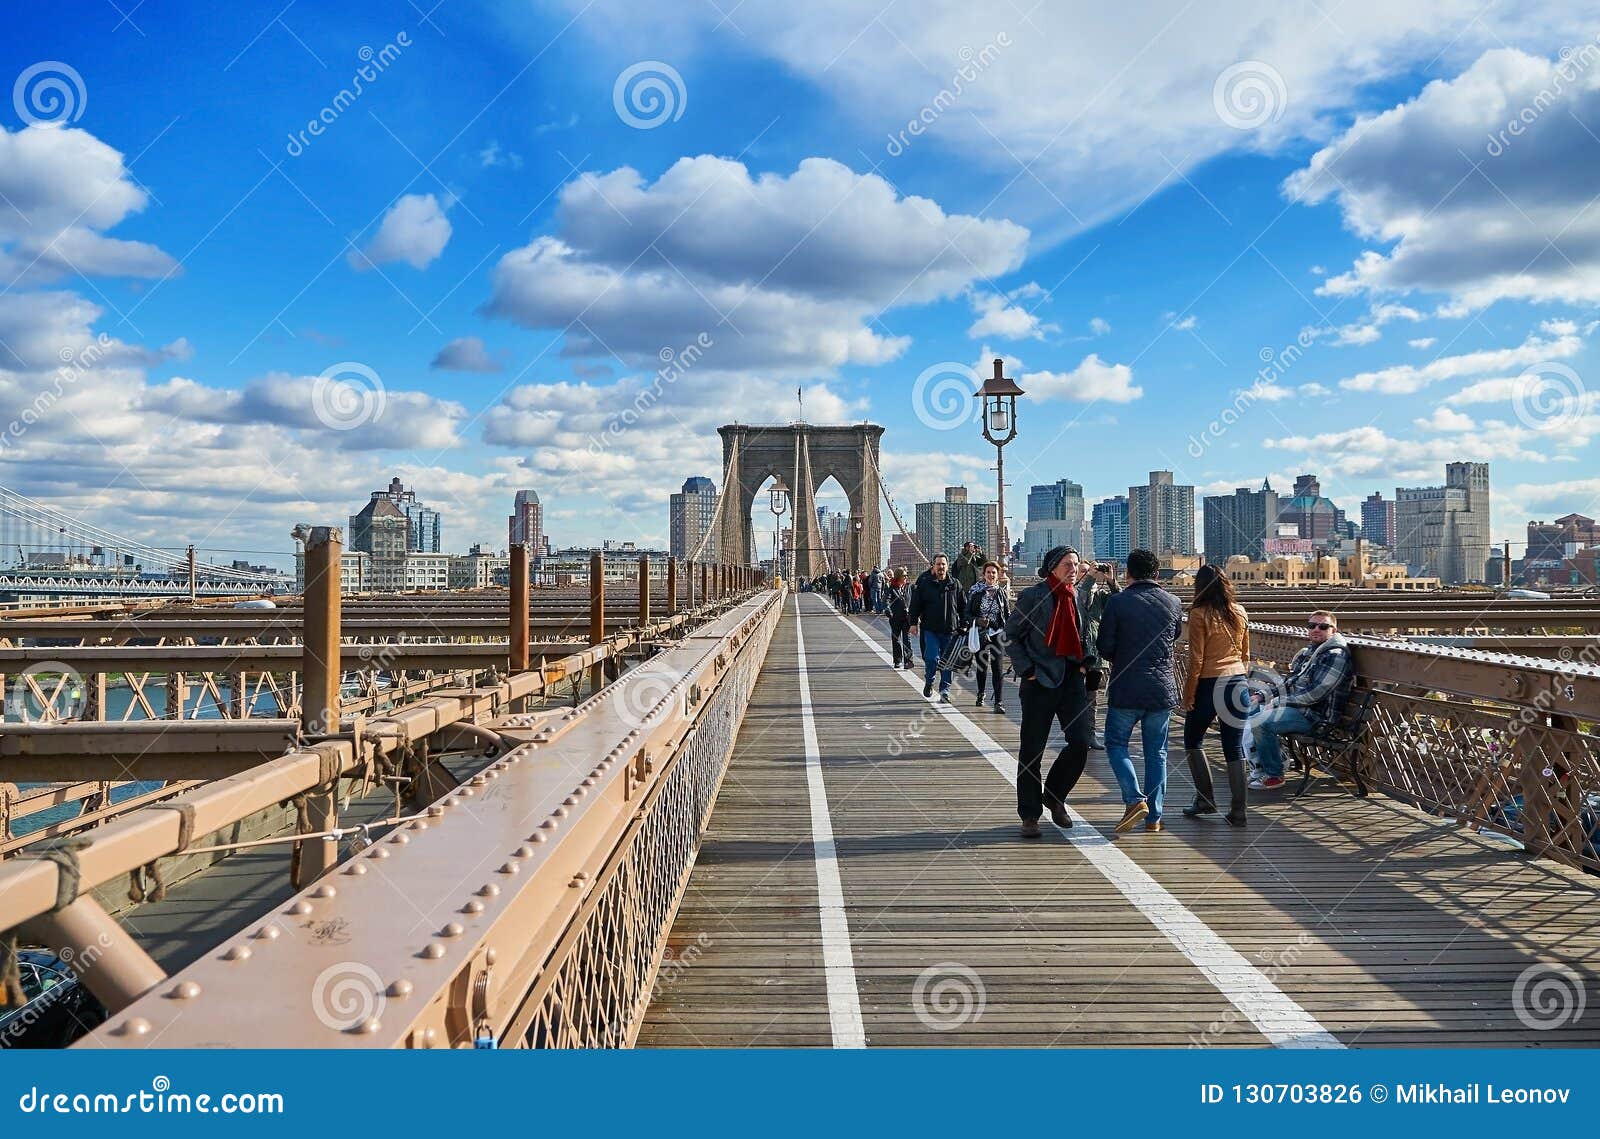 new york, oct,25, 2013: view on famous nyc brooklyn bridge